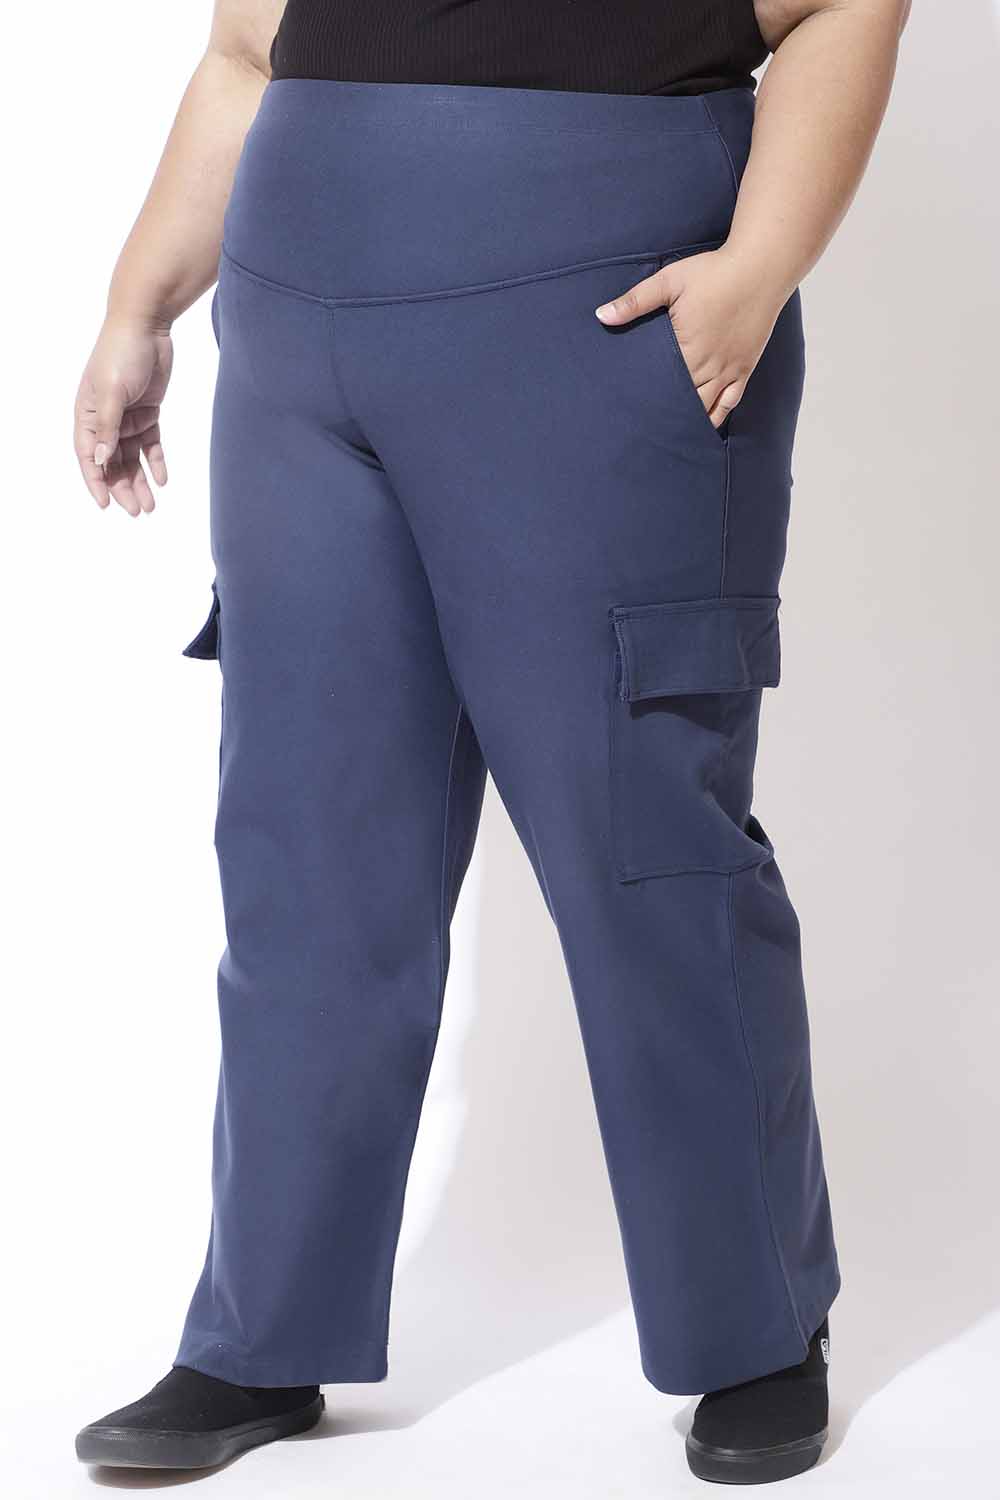 Denim Blue Tummy Shaper Cargo Pants for Women